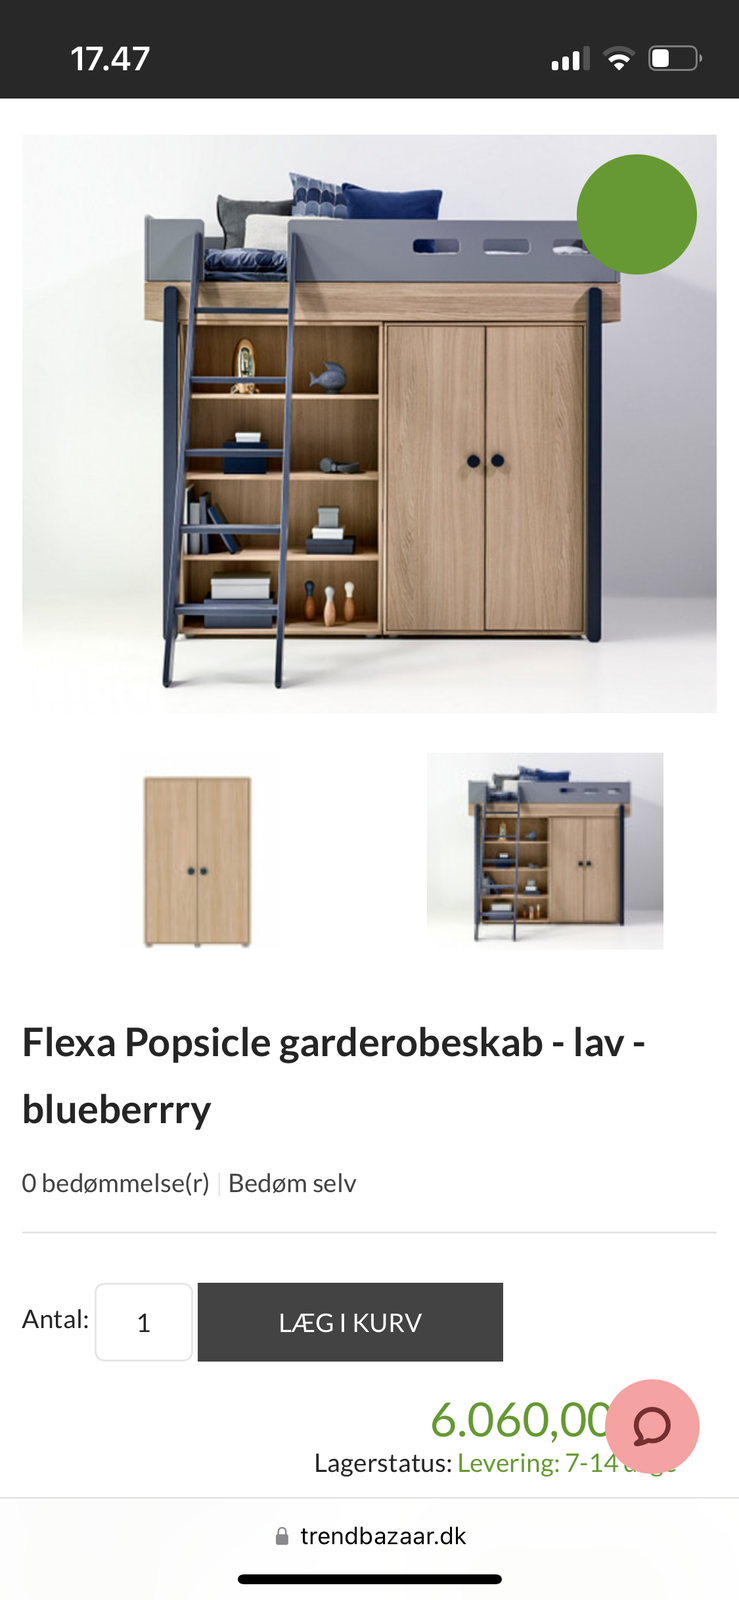 Flexa Popsicle Blueberry garderobeskab